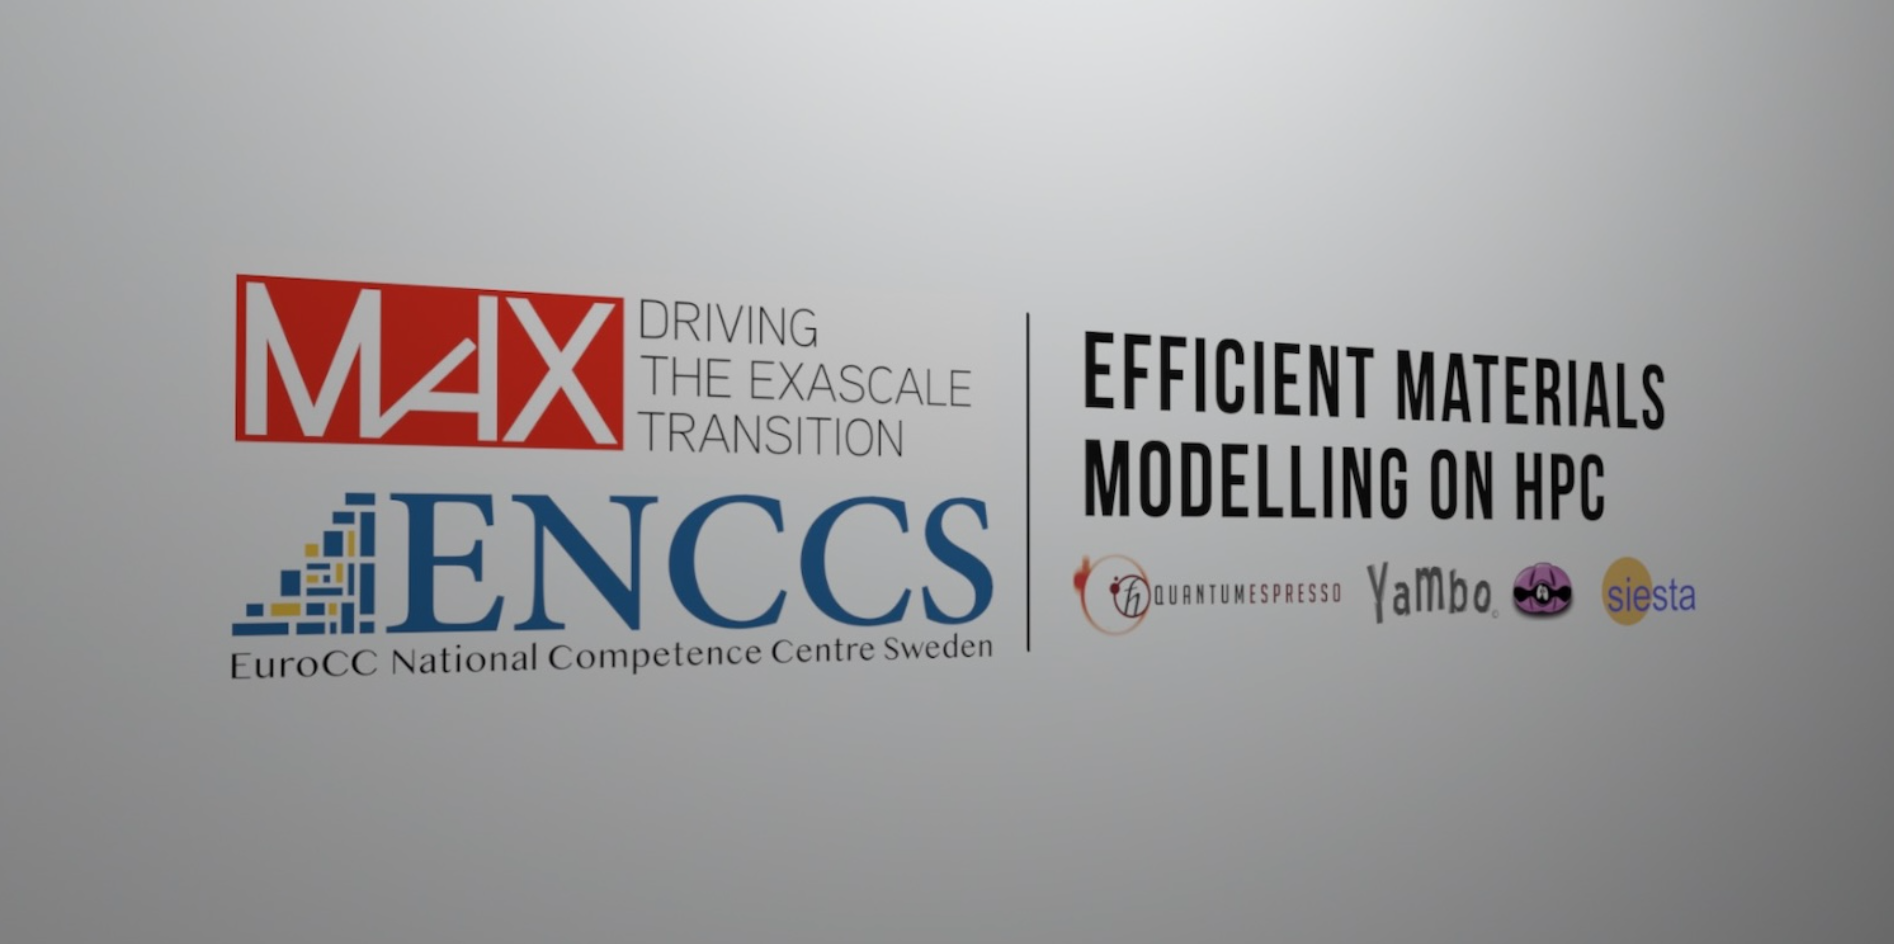 ENCCS – Efficient materials modelling on HPC